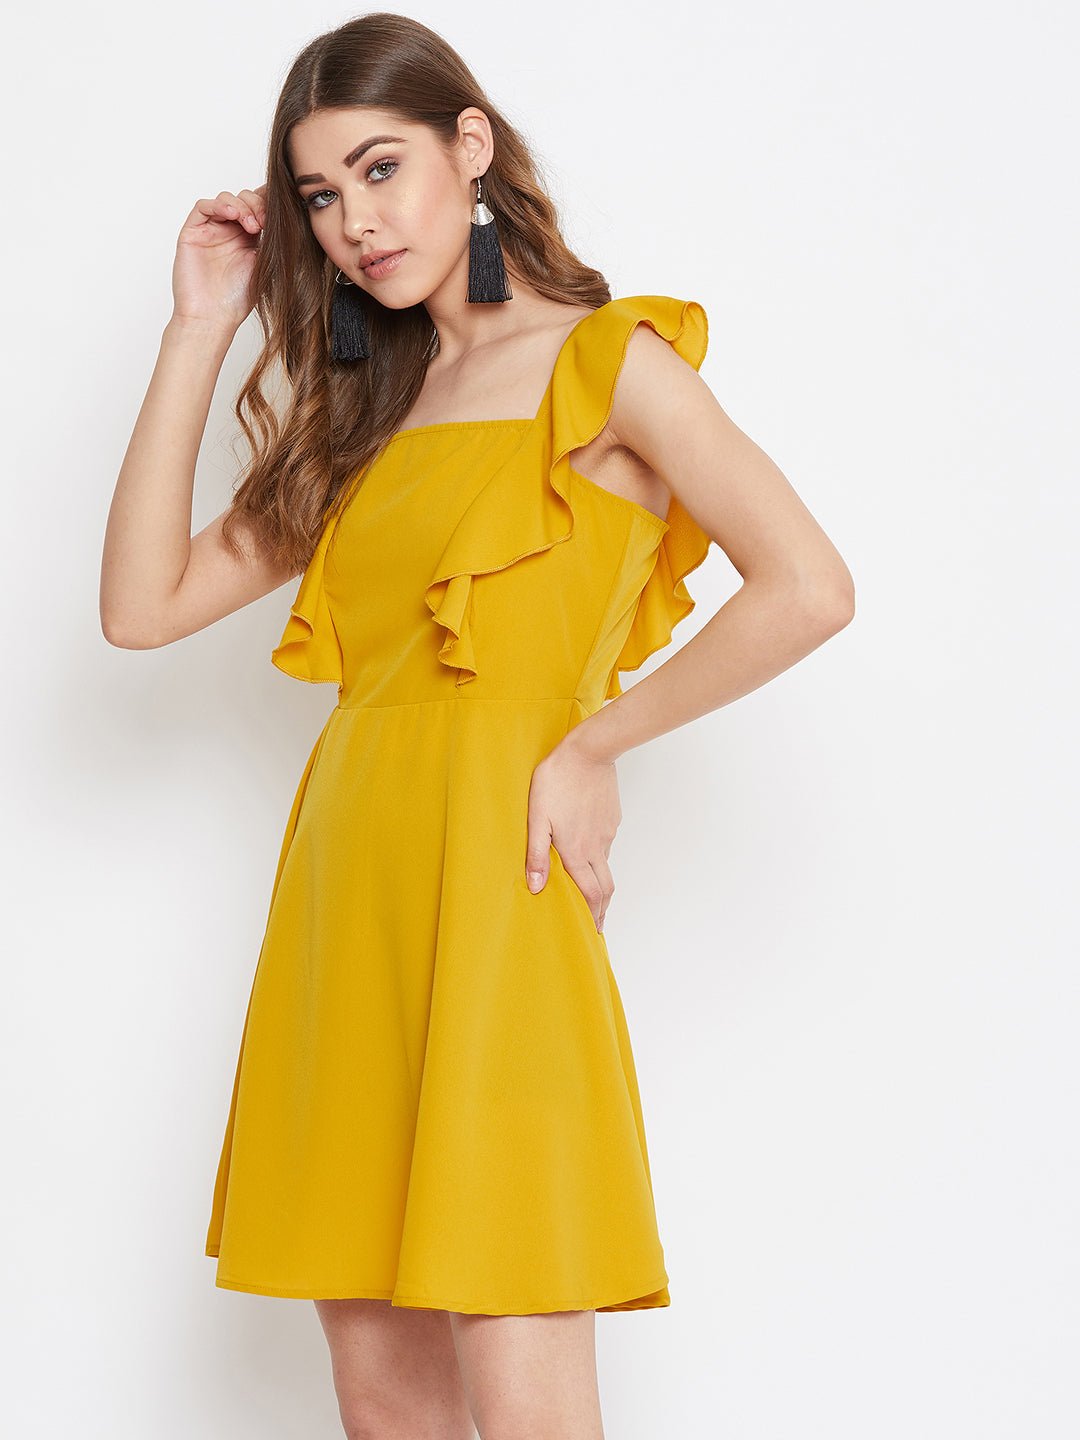 Folk Republic Women Solid Mustard Yellow Sleeveless Ruffled Fit & Flare Mini Dress - #folk republic#